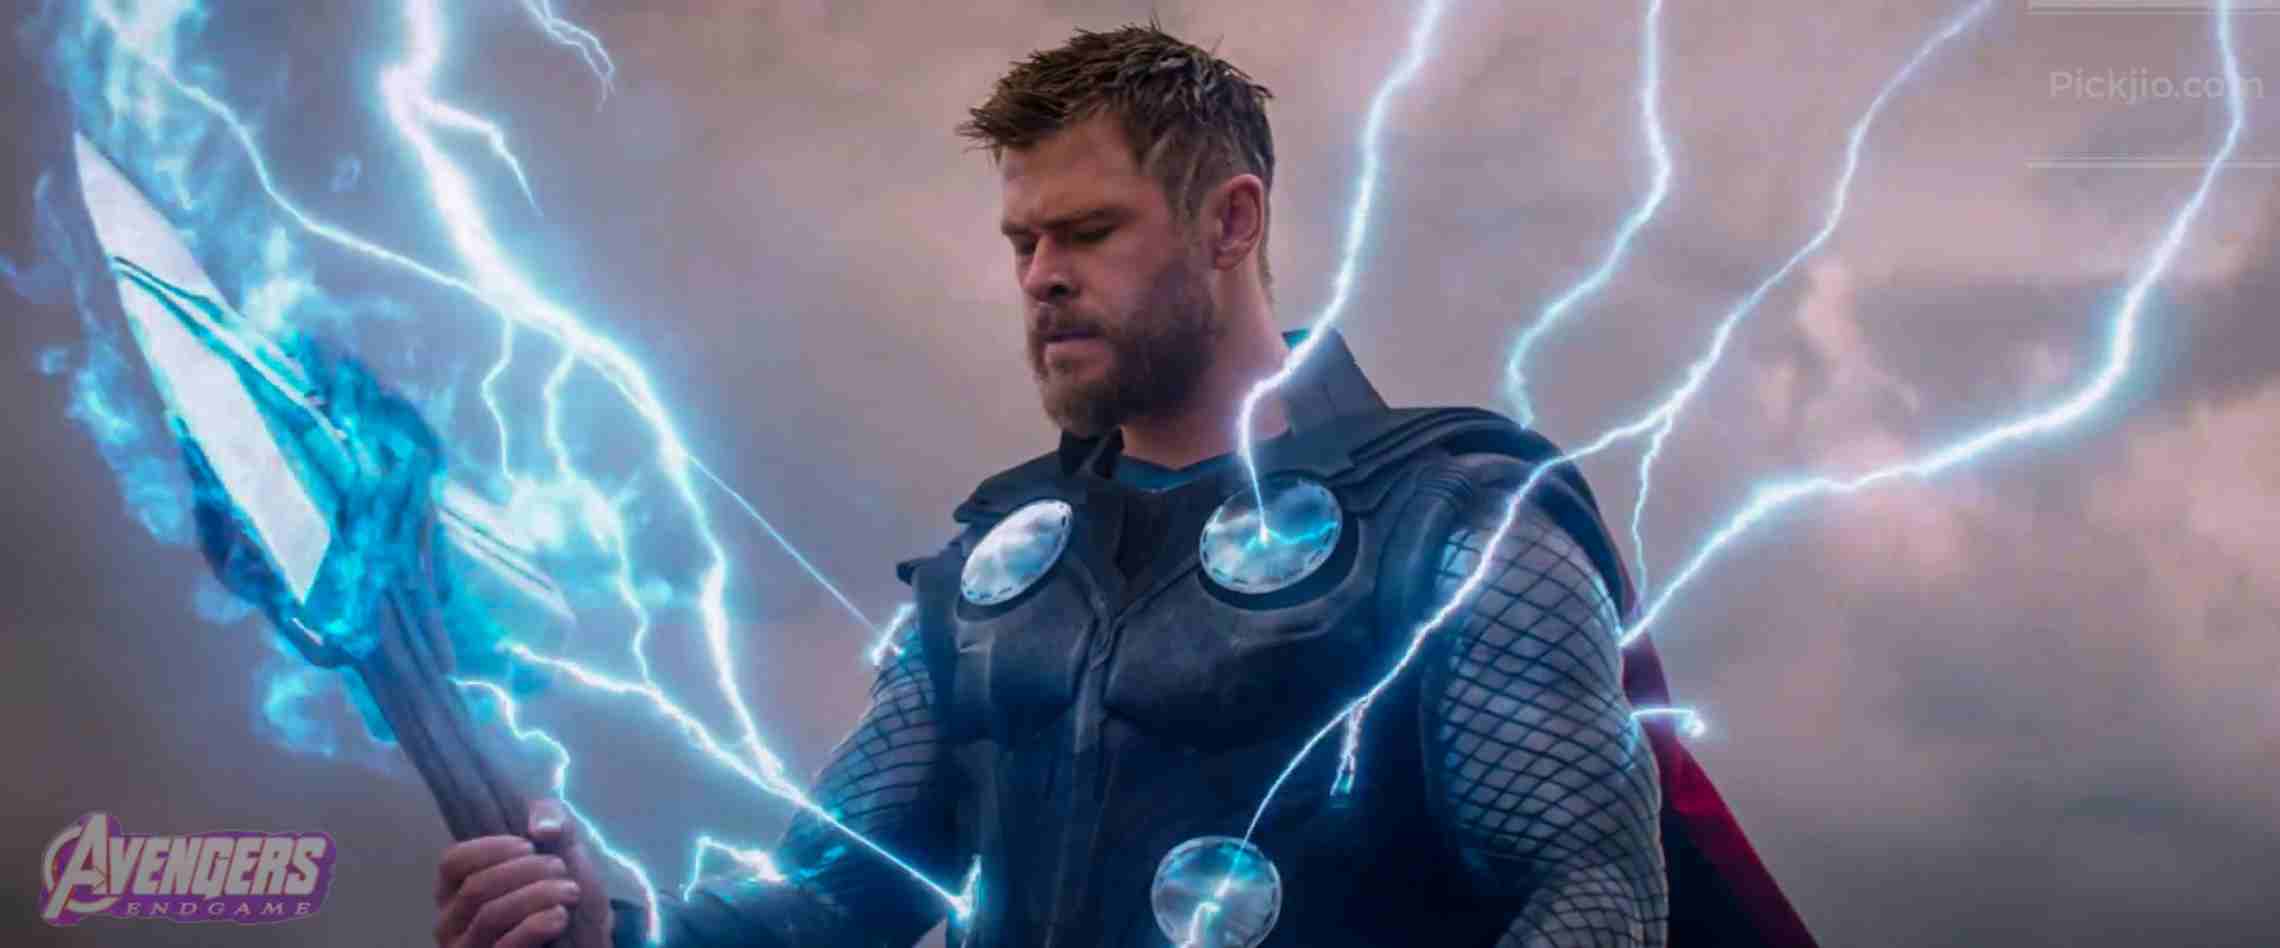 Avengers Endgame (2019) HD Wallpaper Image Download Now